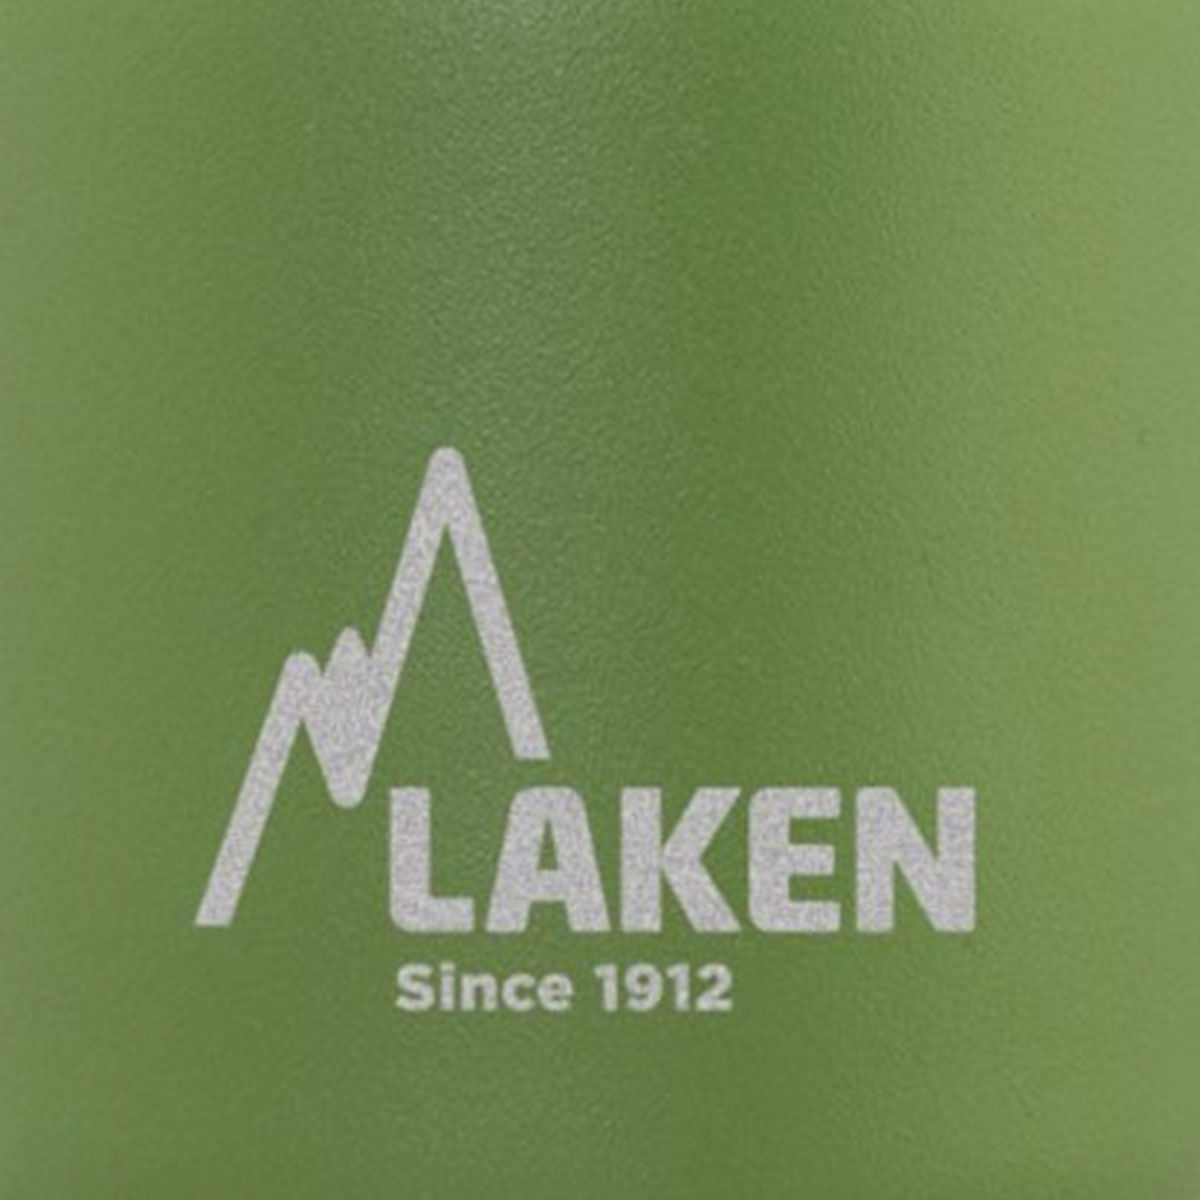 LAKEN - BASIC STEEL FLOW 0.35 L